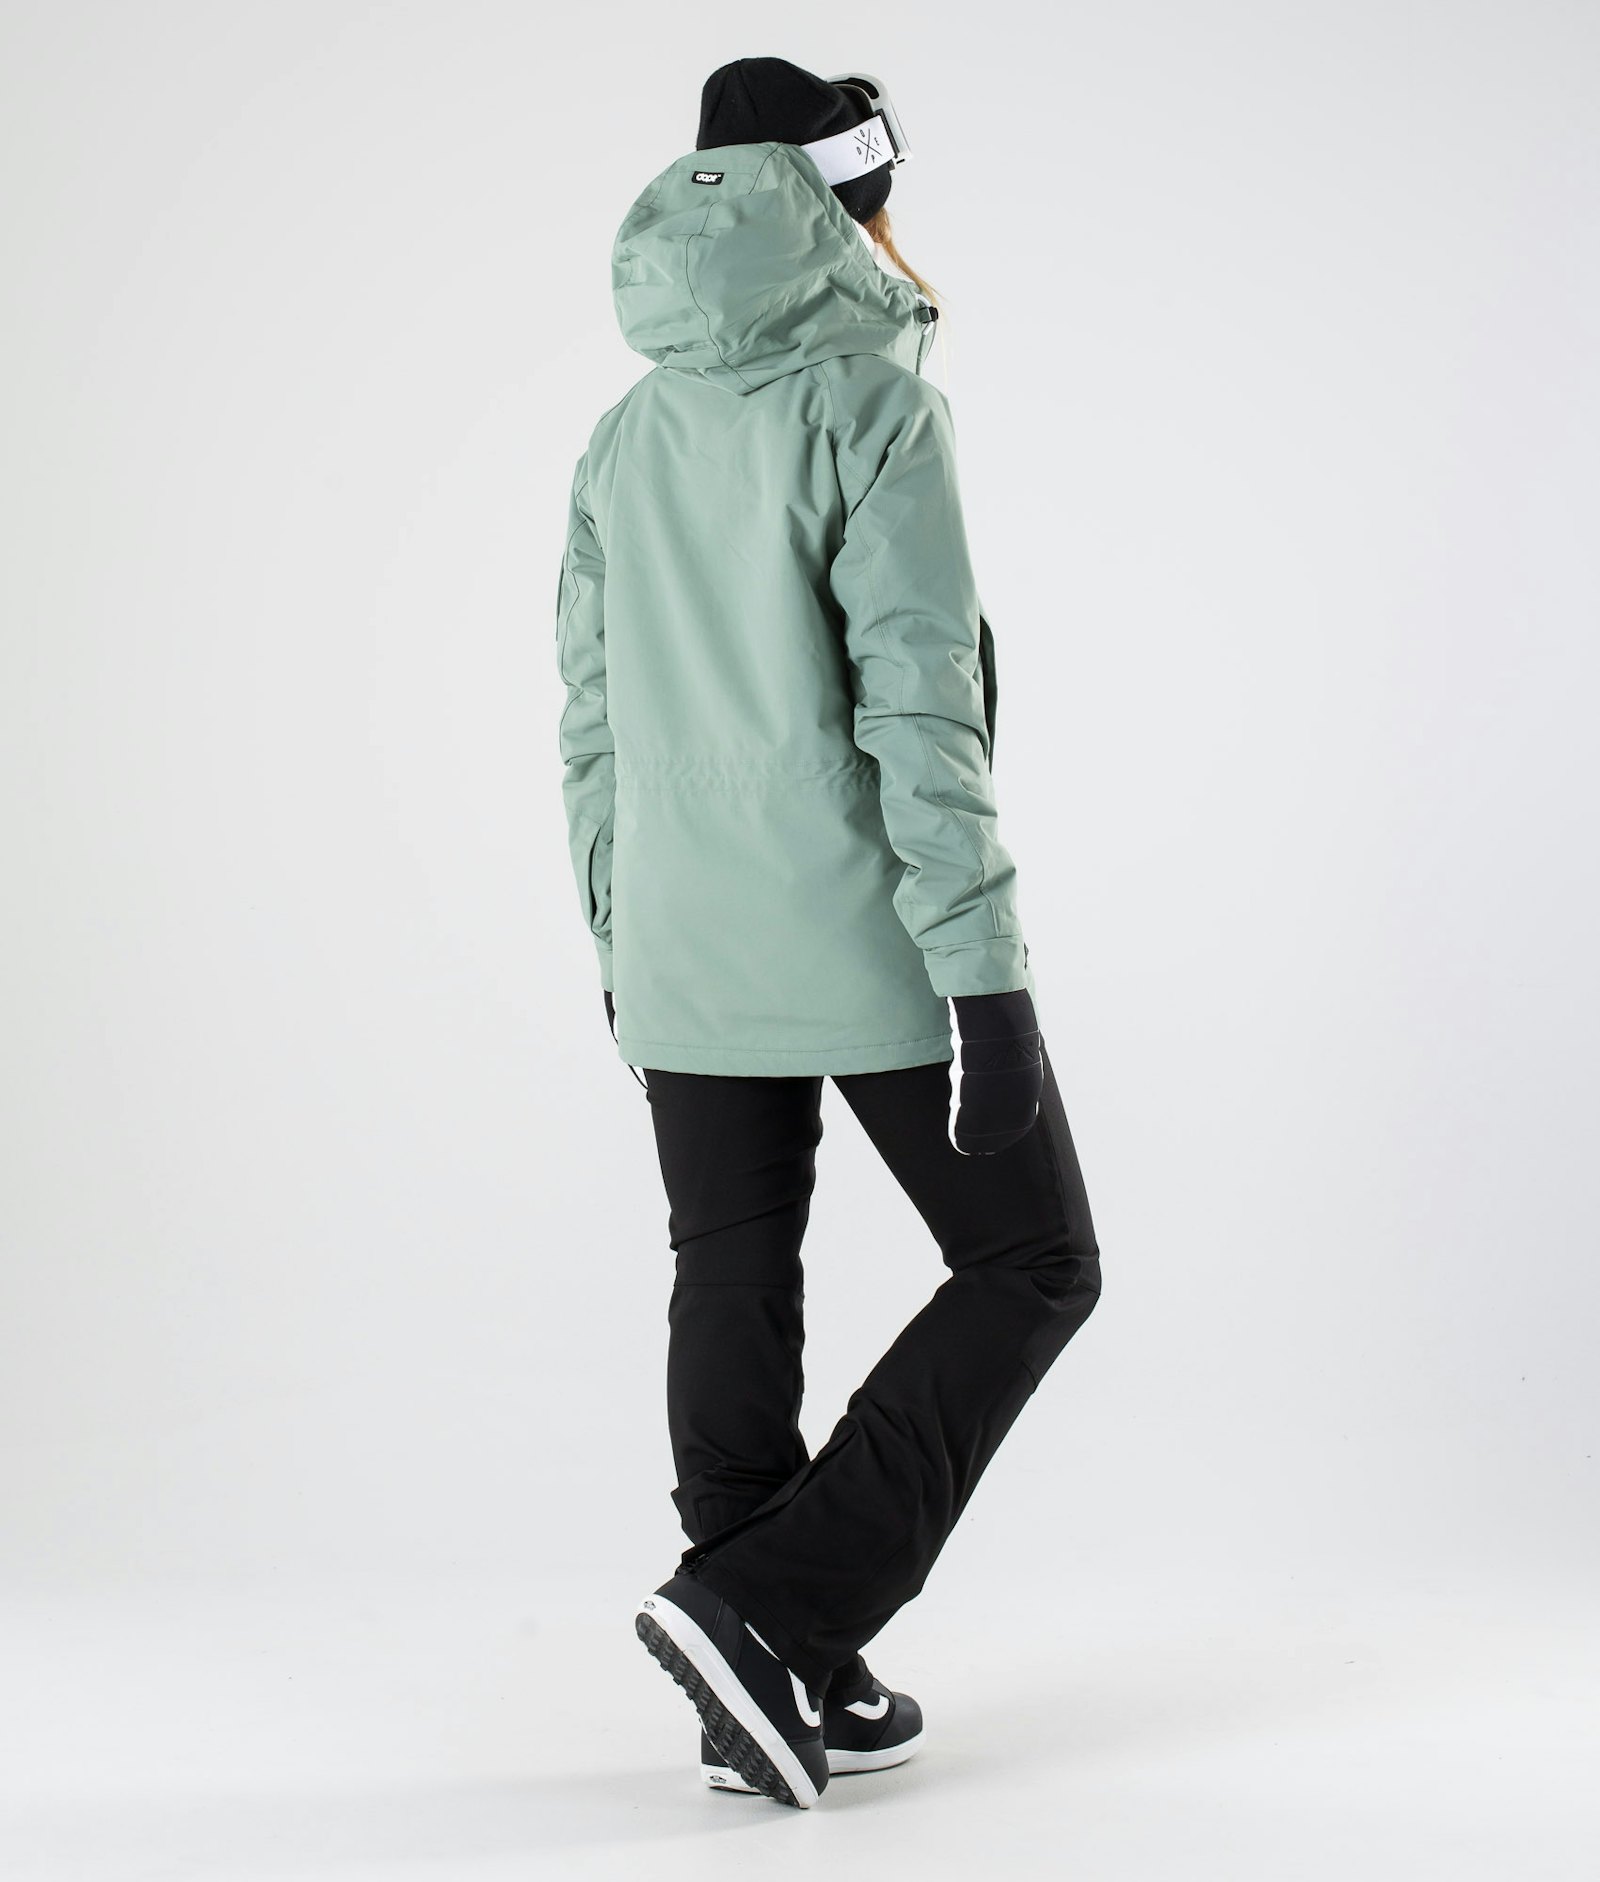 Annok W 2019 Veste Snowboard Femme Faded Green